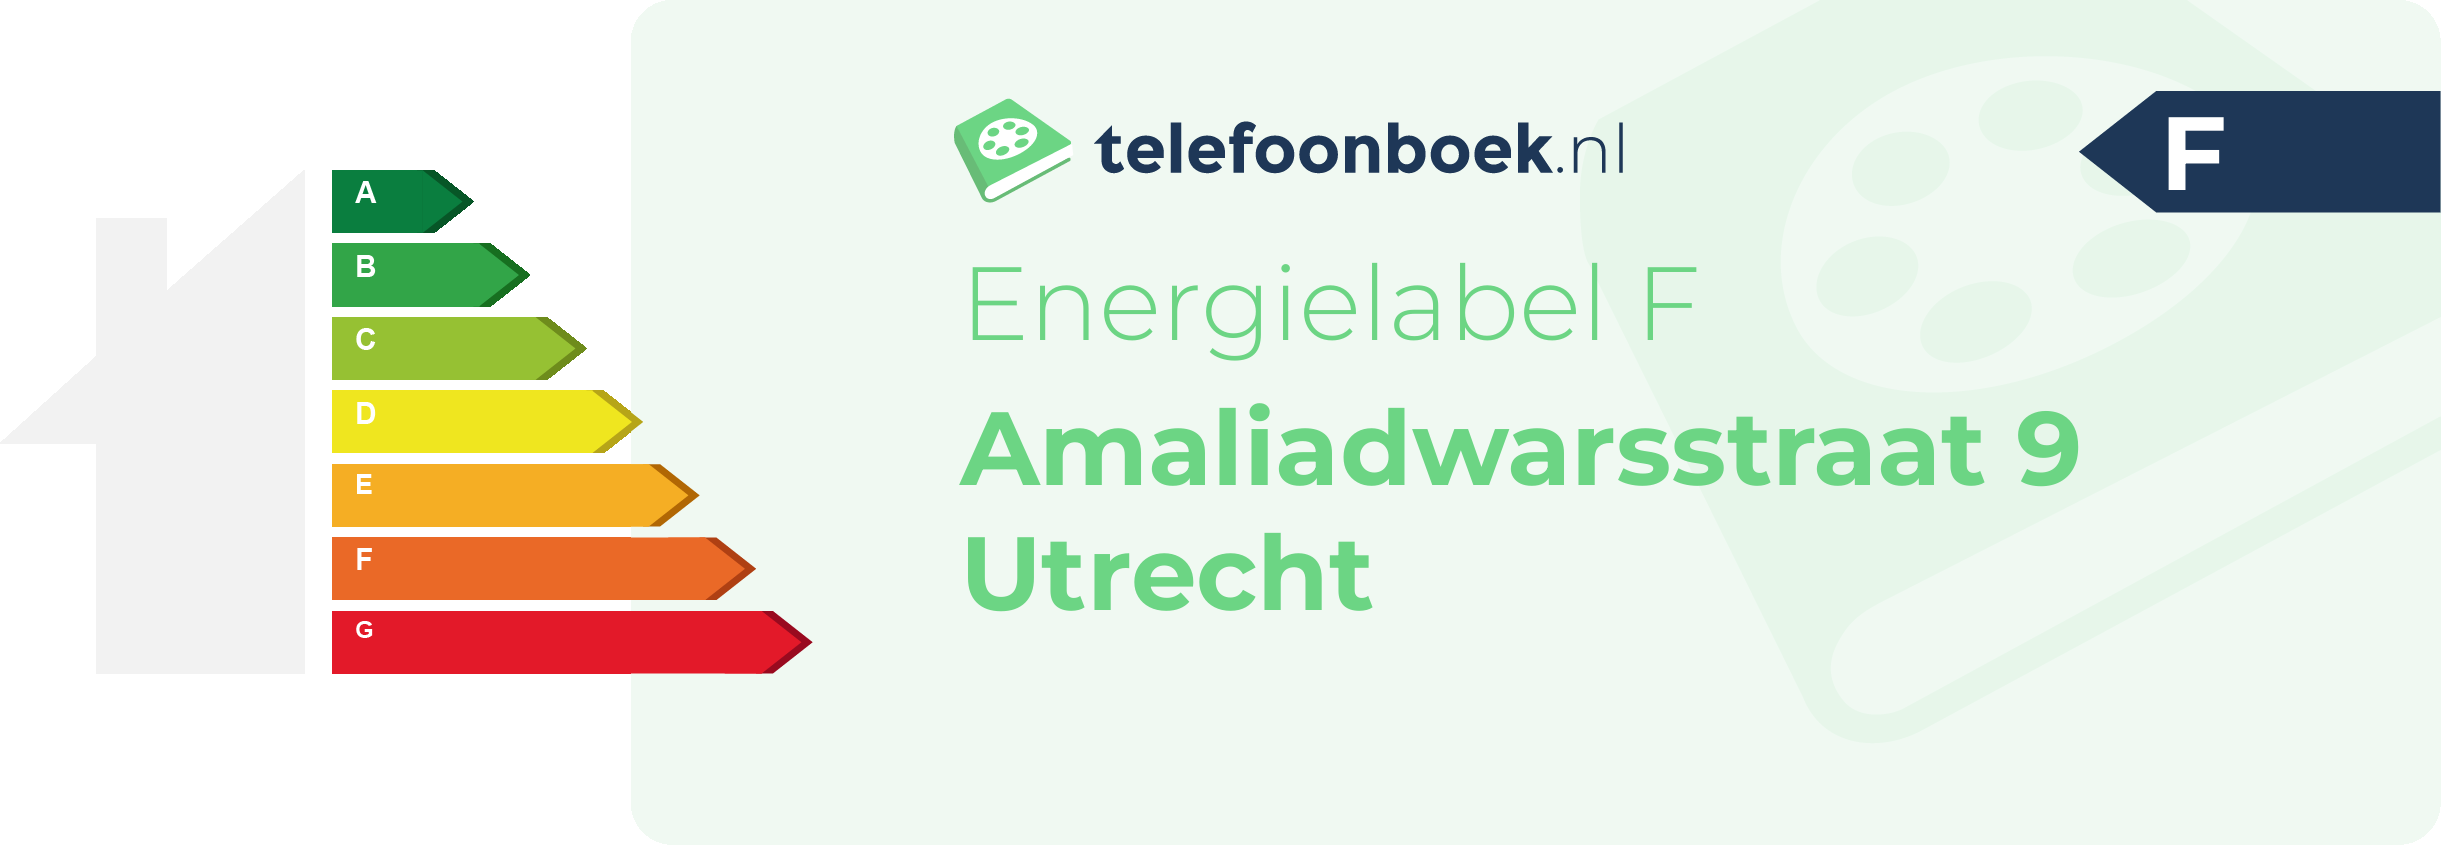 Energielabel Amaliadwarsstraat 9 Utrecht